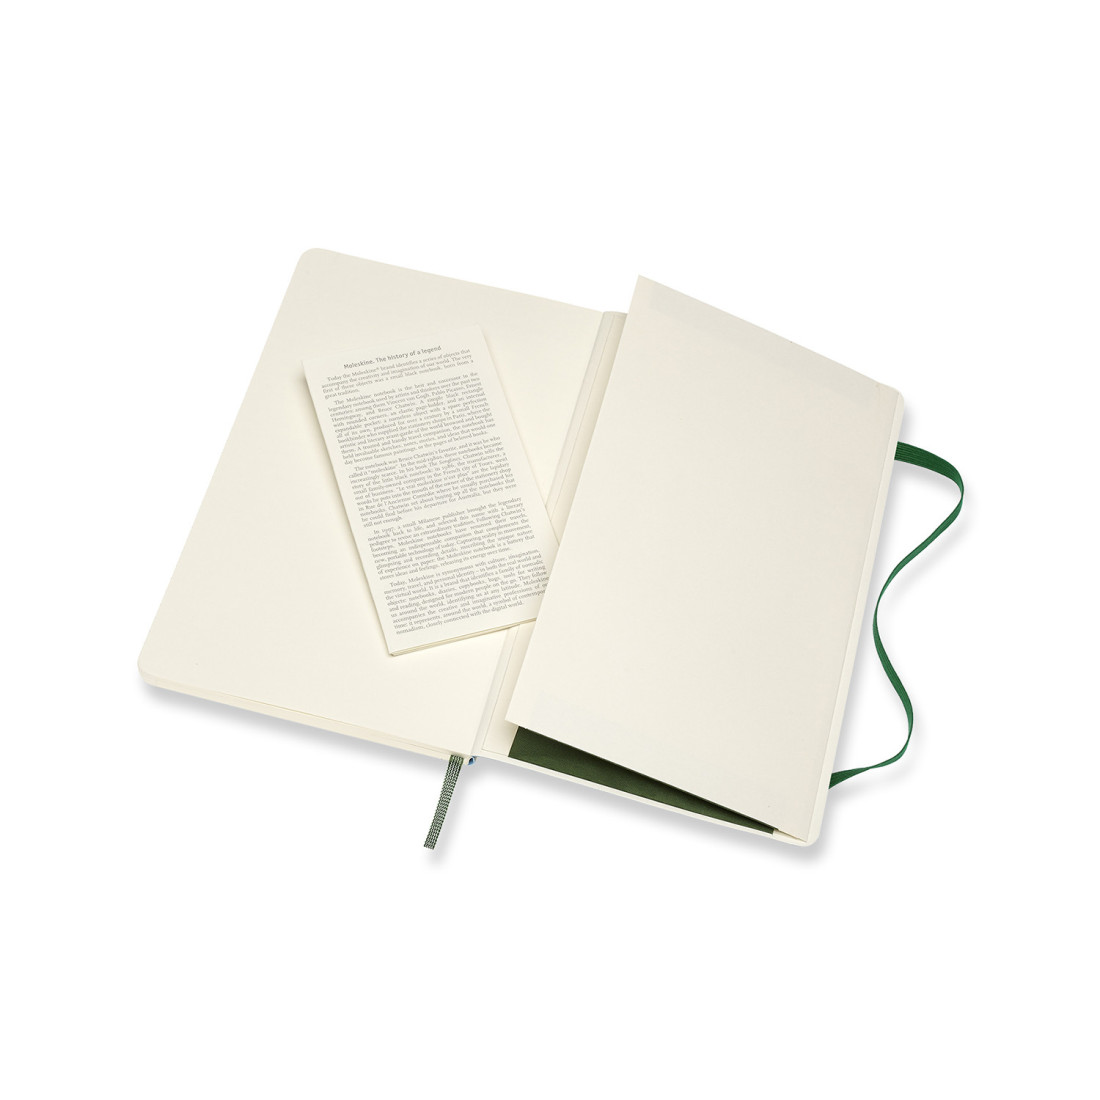 Moleskine Notebook Large 13x21 Ruled Myrtle Green Hard Cover